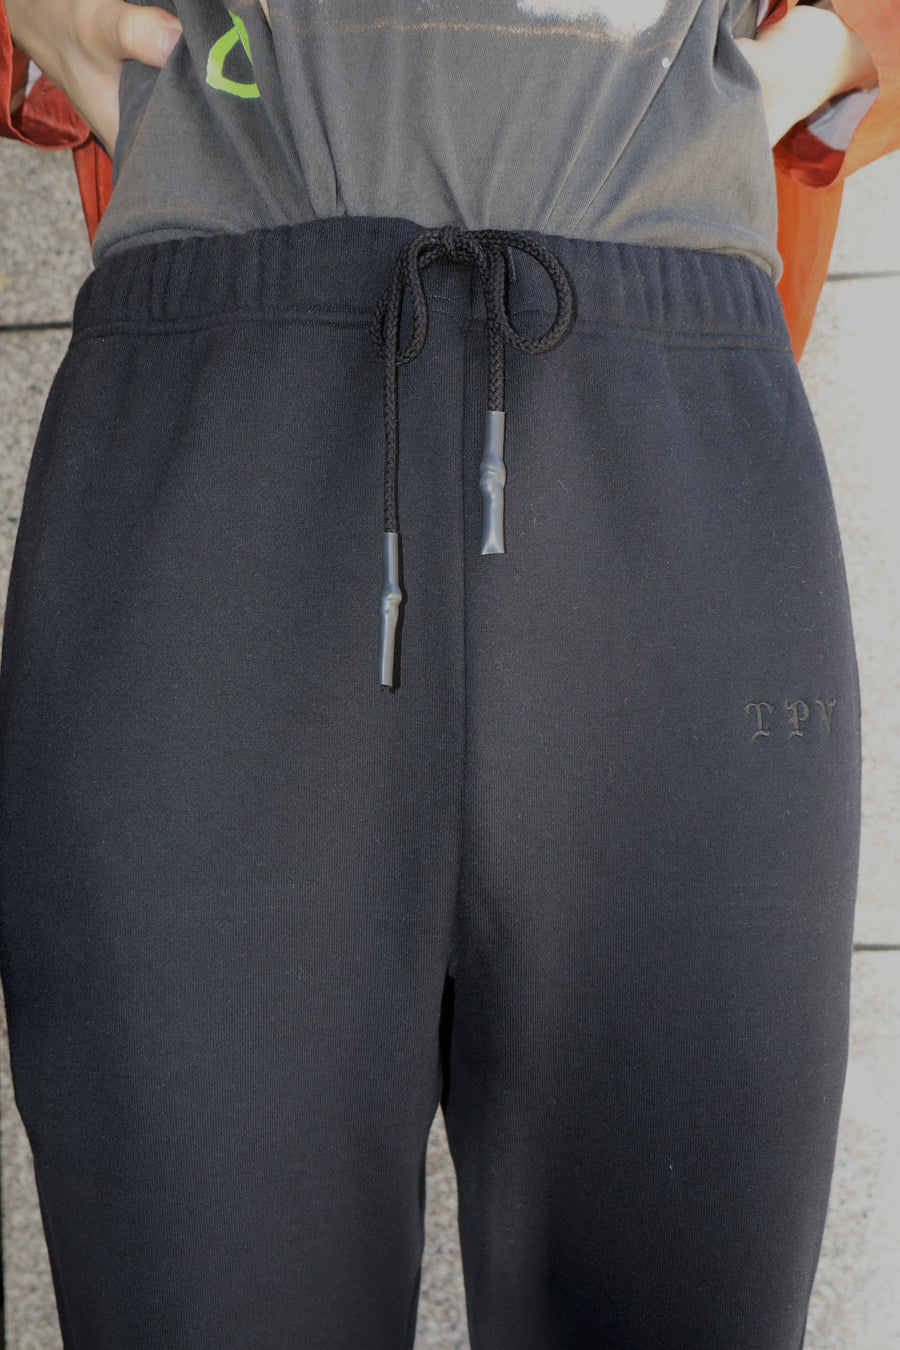 TOGA VIRILIS  Zip sweat pants(BLACK)